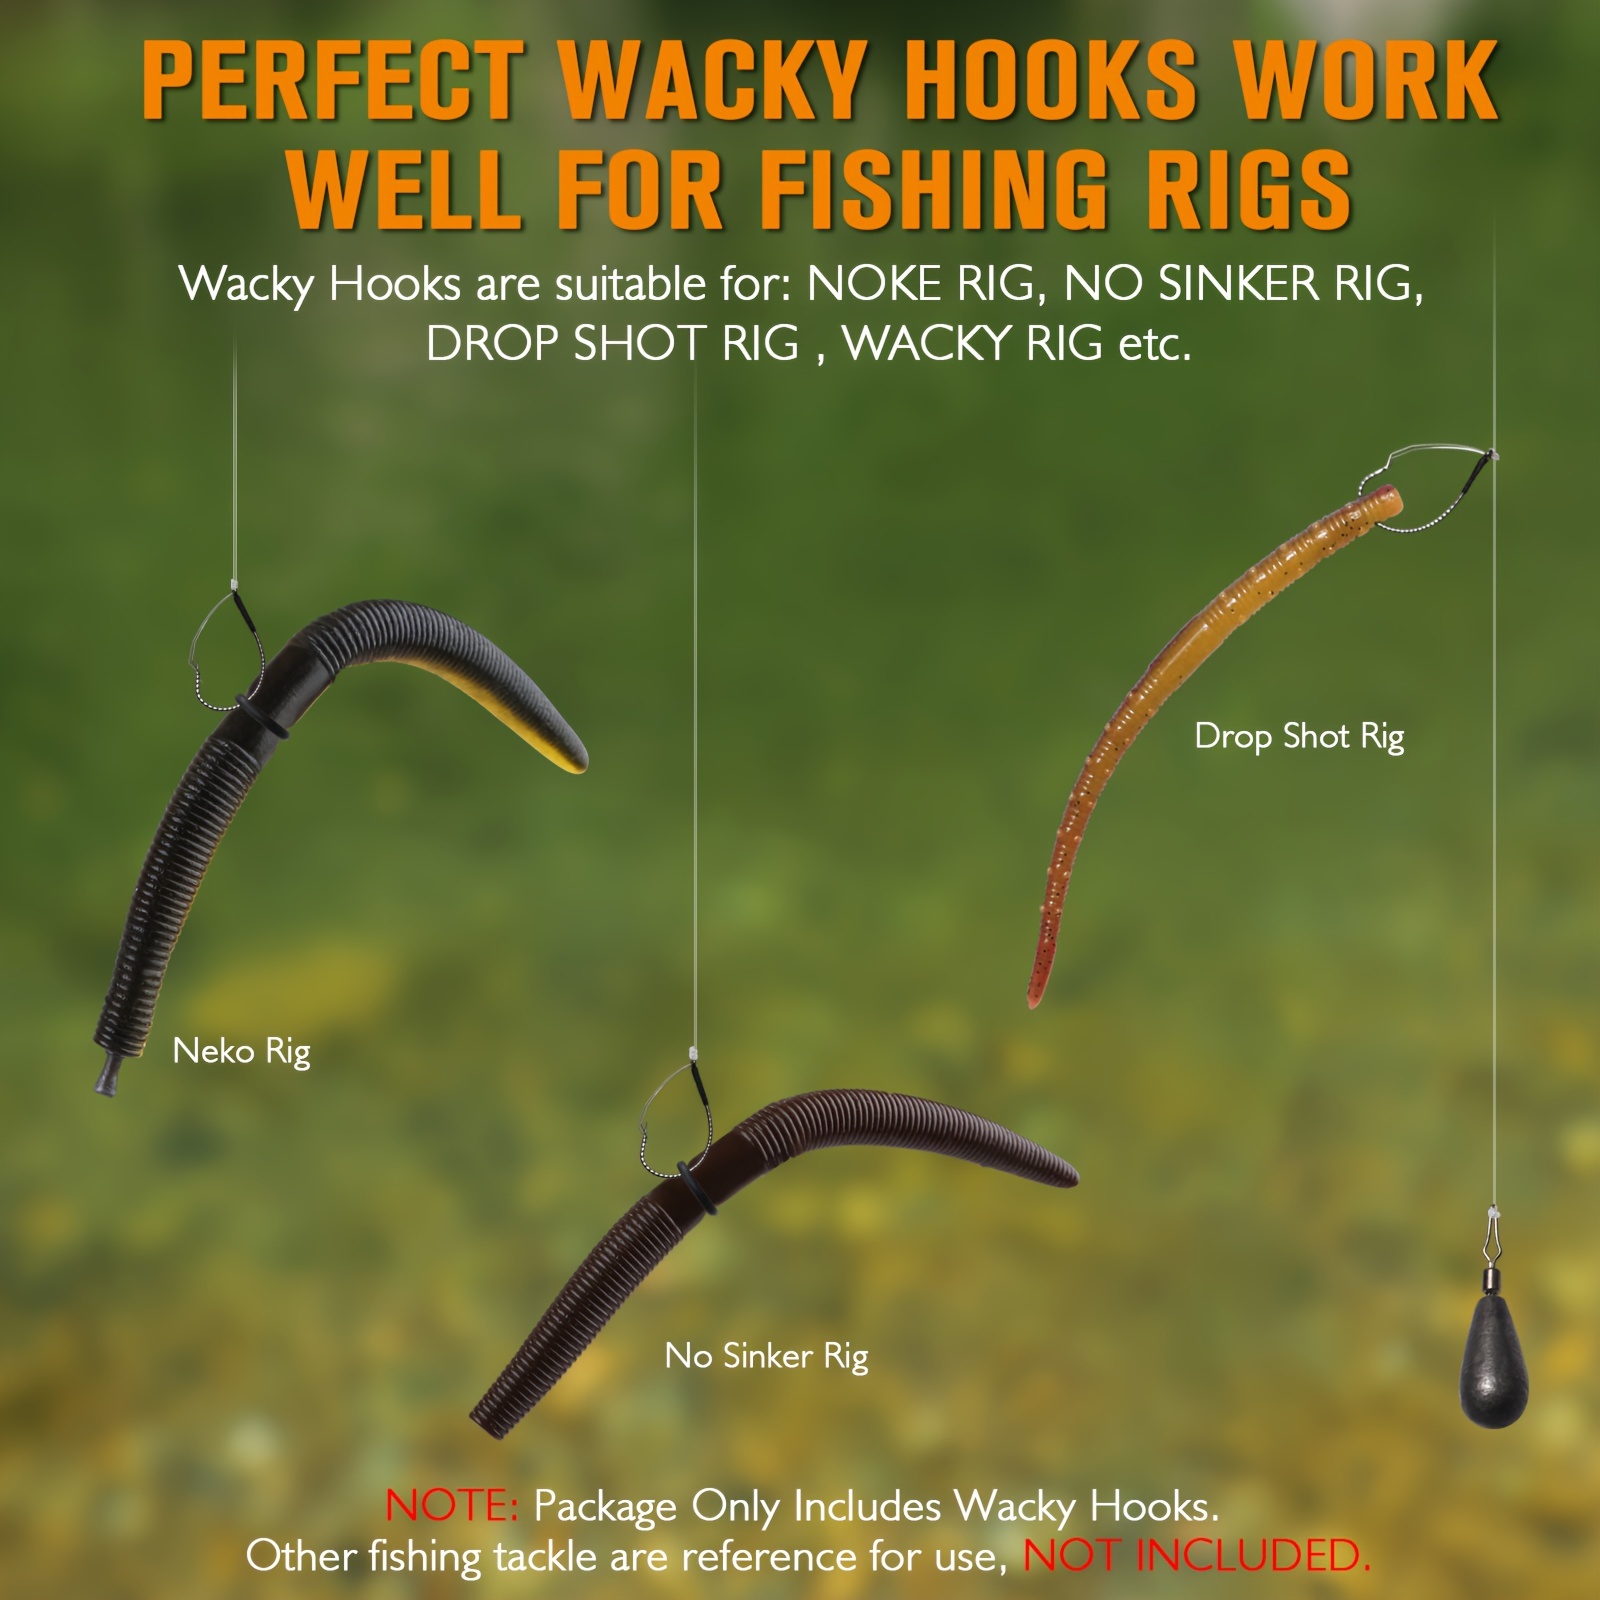 Wacky Weedless Fishing Hooks - 50pcs/Box Wacky Worm Hook with Weed